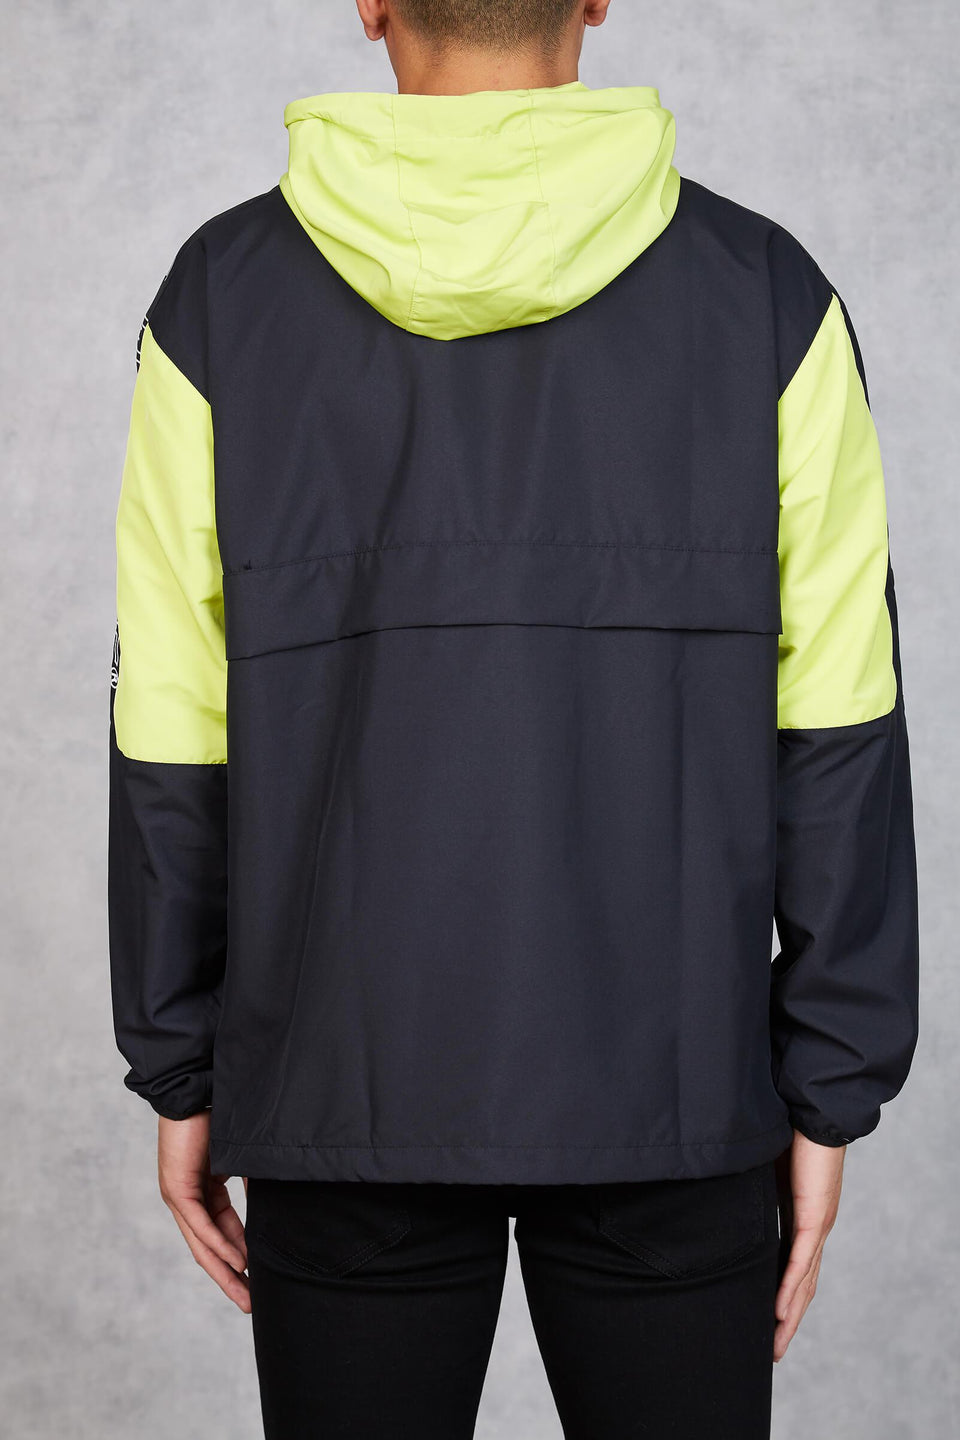 Storm Windbreaker Reflective Jacket - Black/Neon